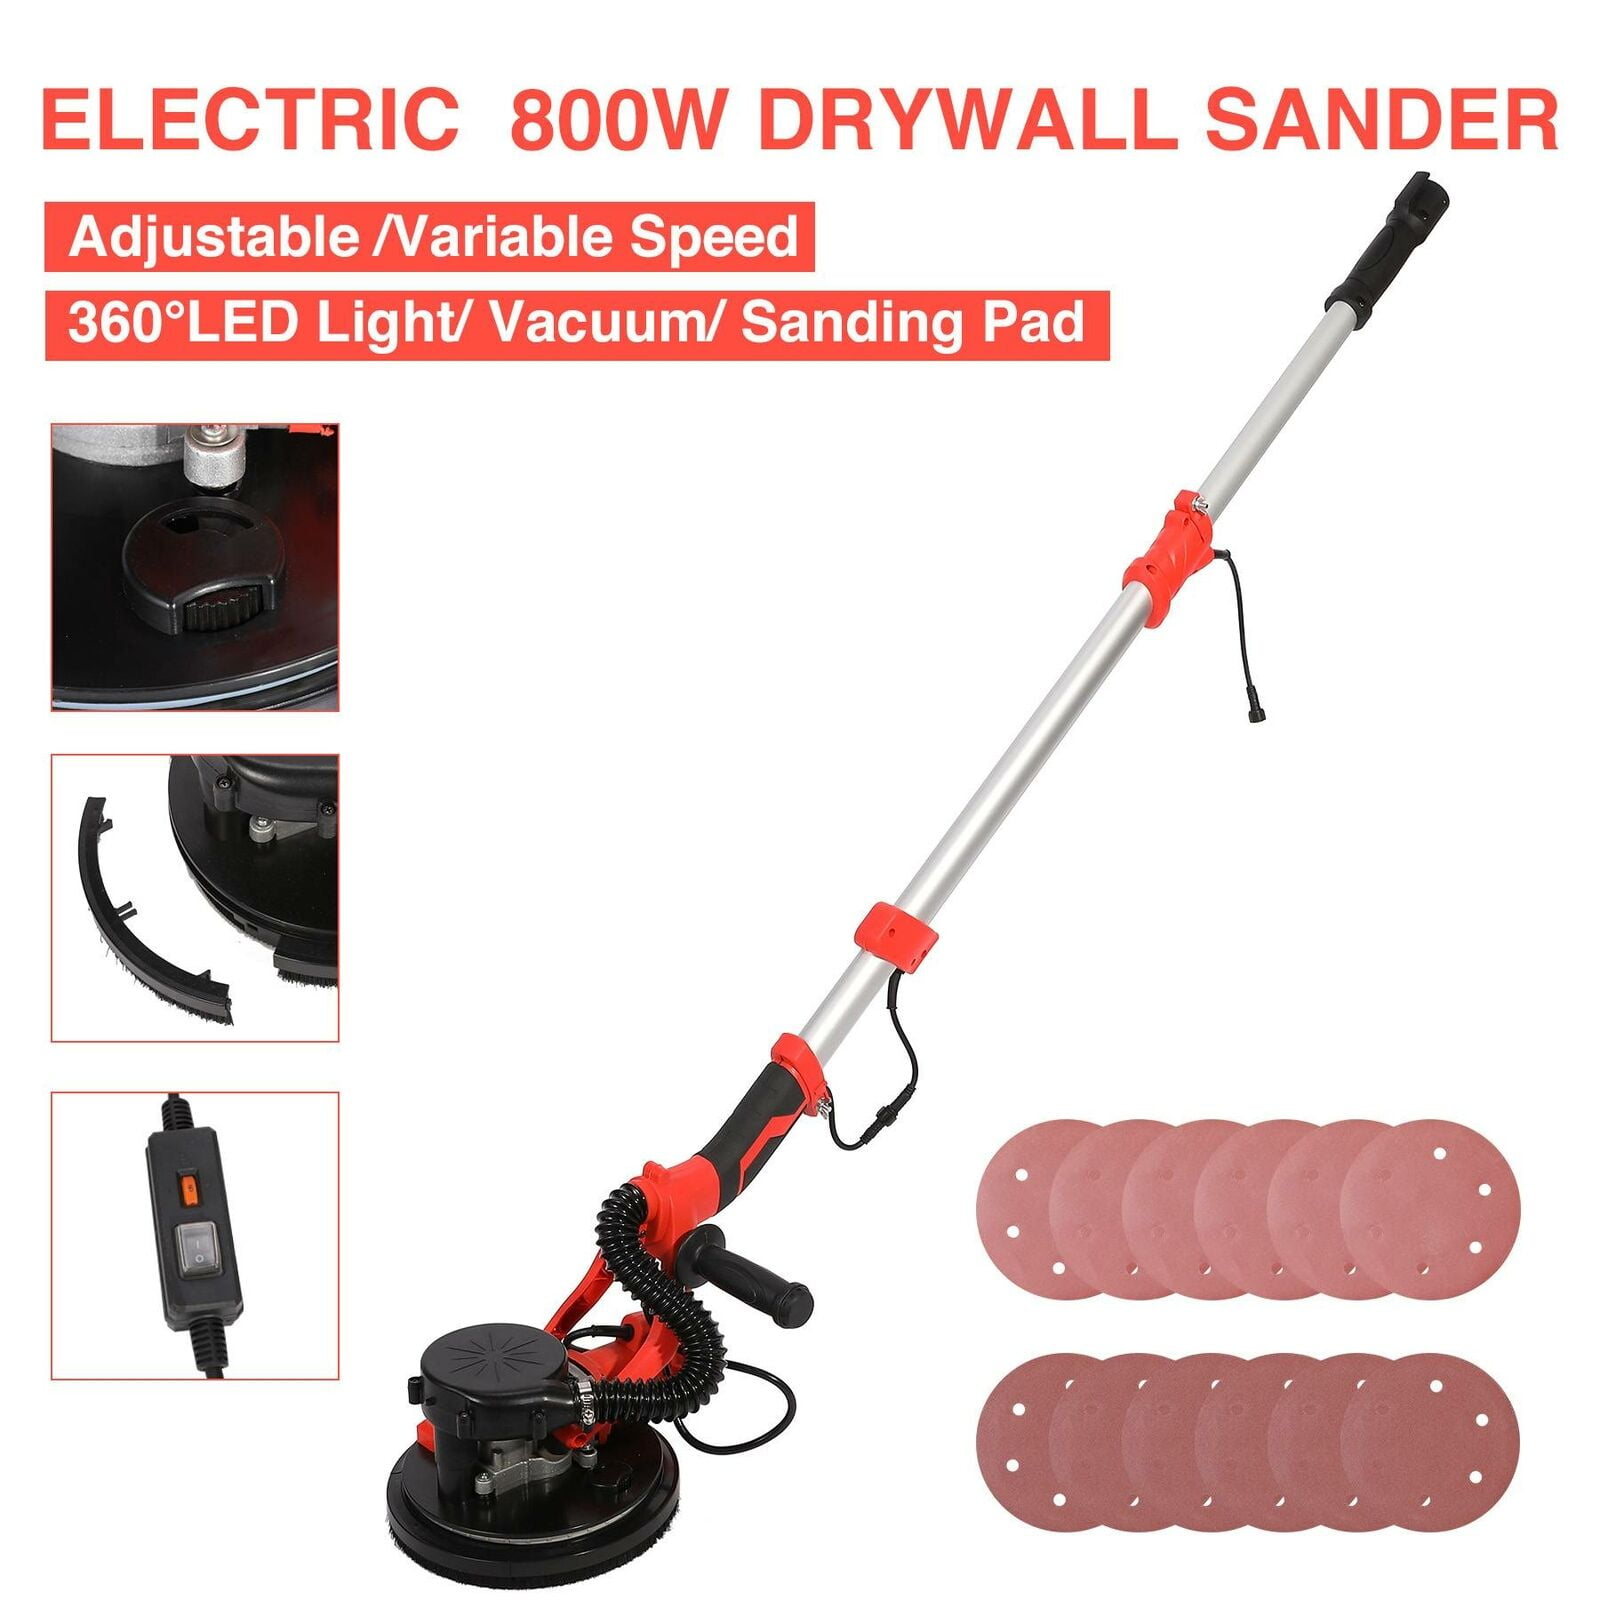 800W Electric Drywall Sander Adjustable Variable Speed w/Sanding Pad LED Light 